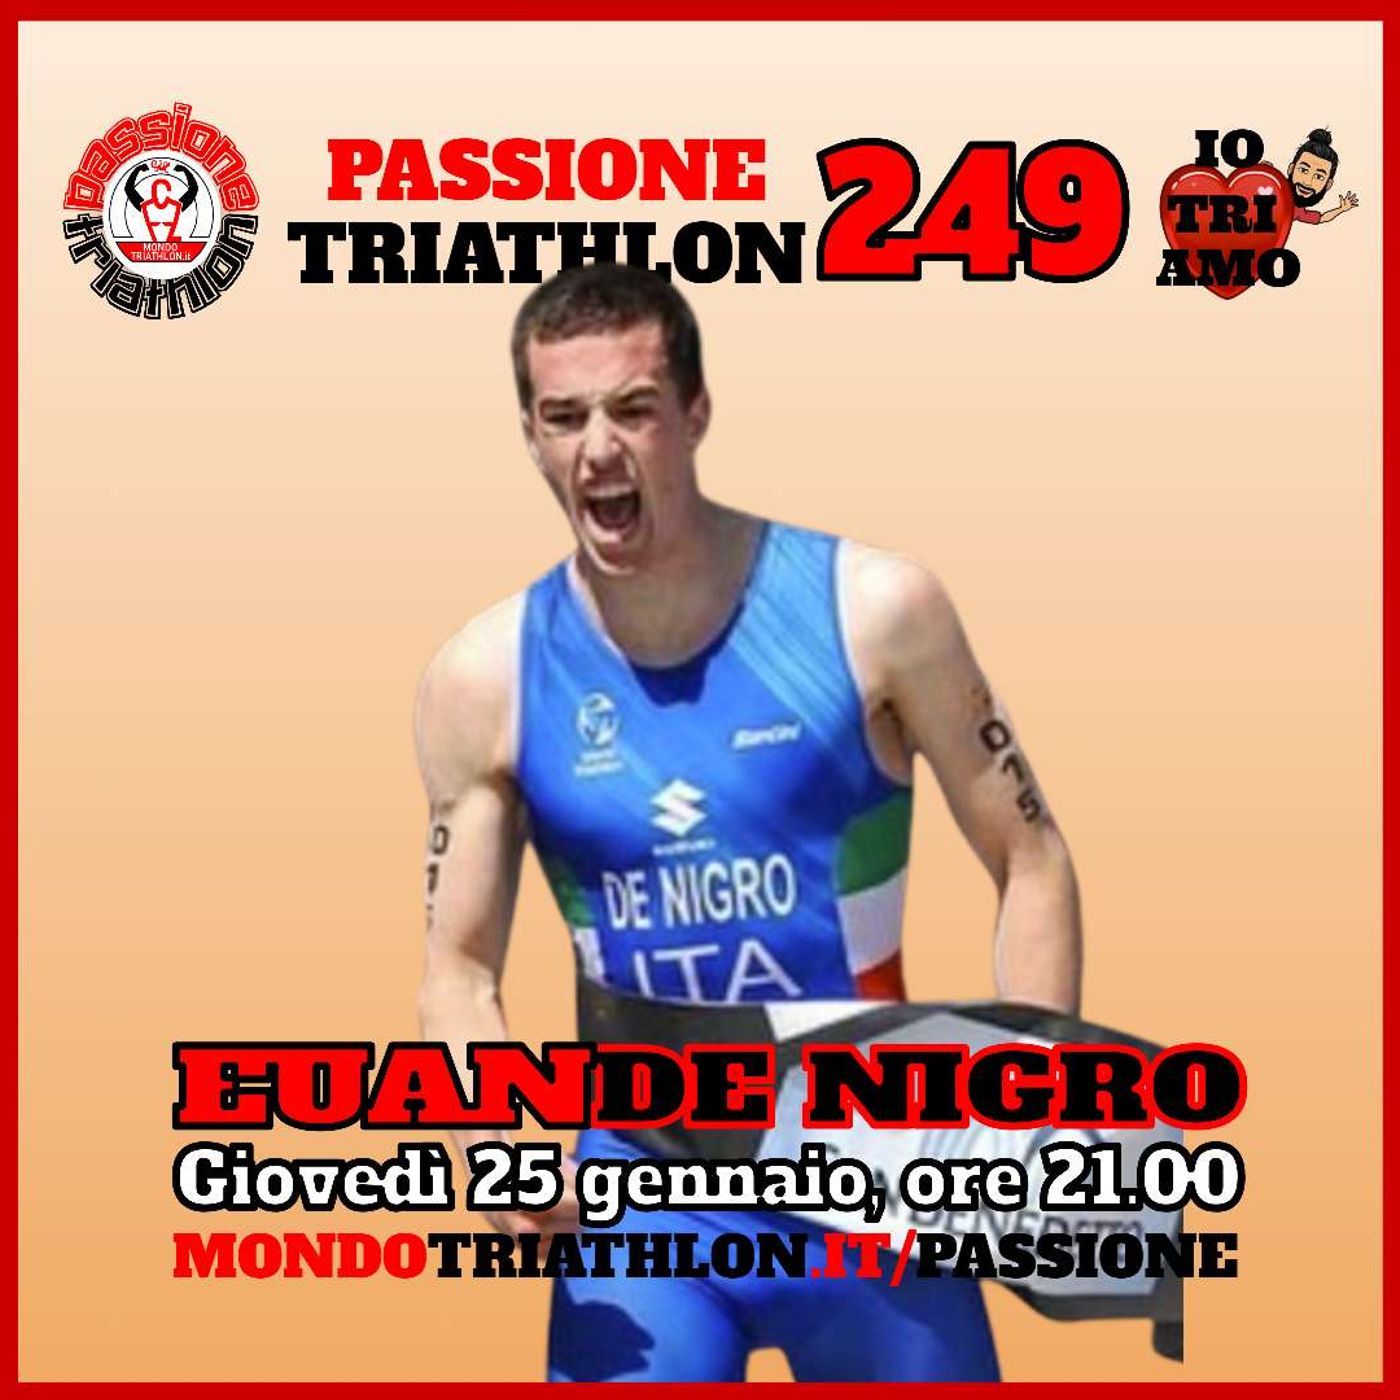 Passione Triathlon n° 249 🏊🚴🏃💗 Euan De Nigro